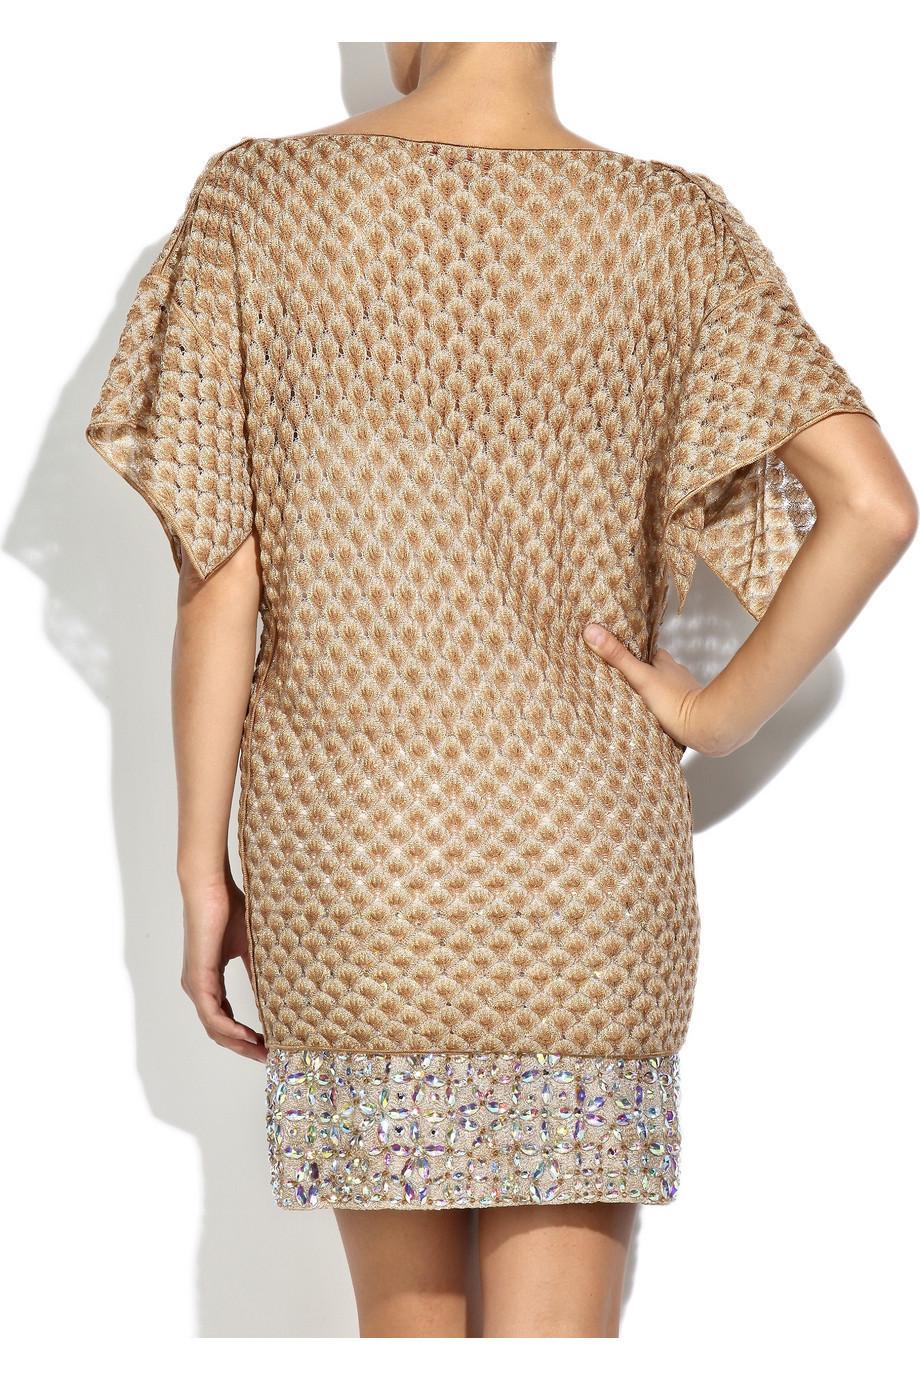 Women's NEW Missoni Gold Metallic Crochet Knit Beaded Crystal Dress 40 For Sale